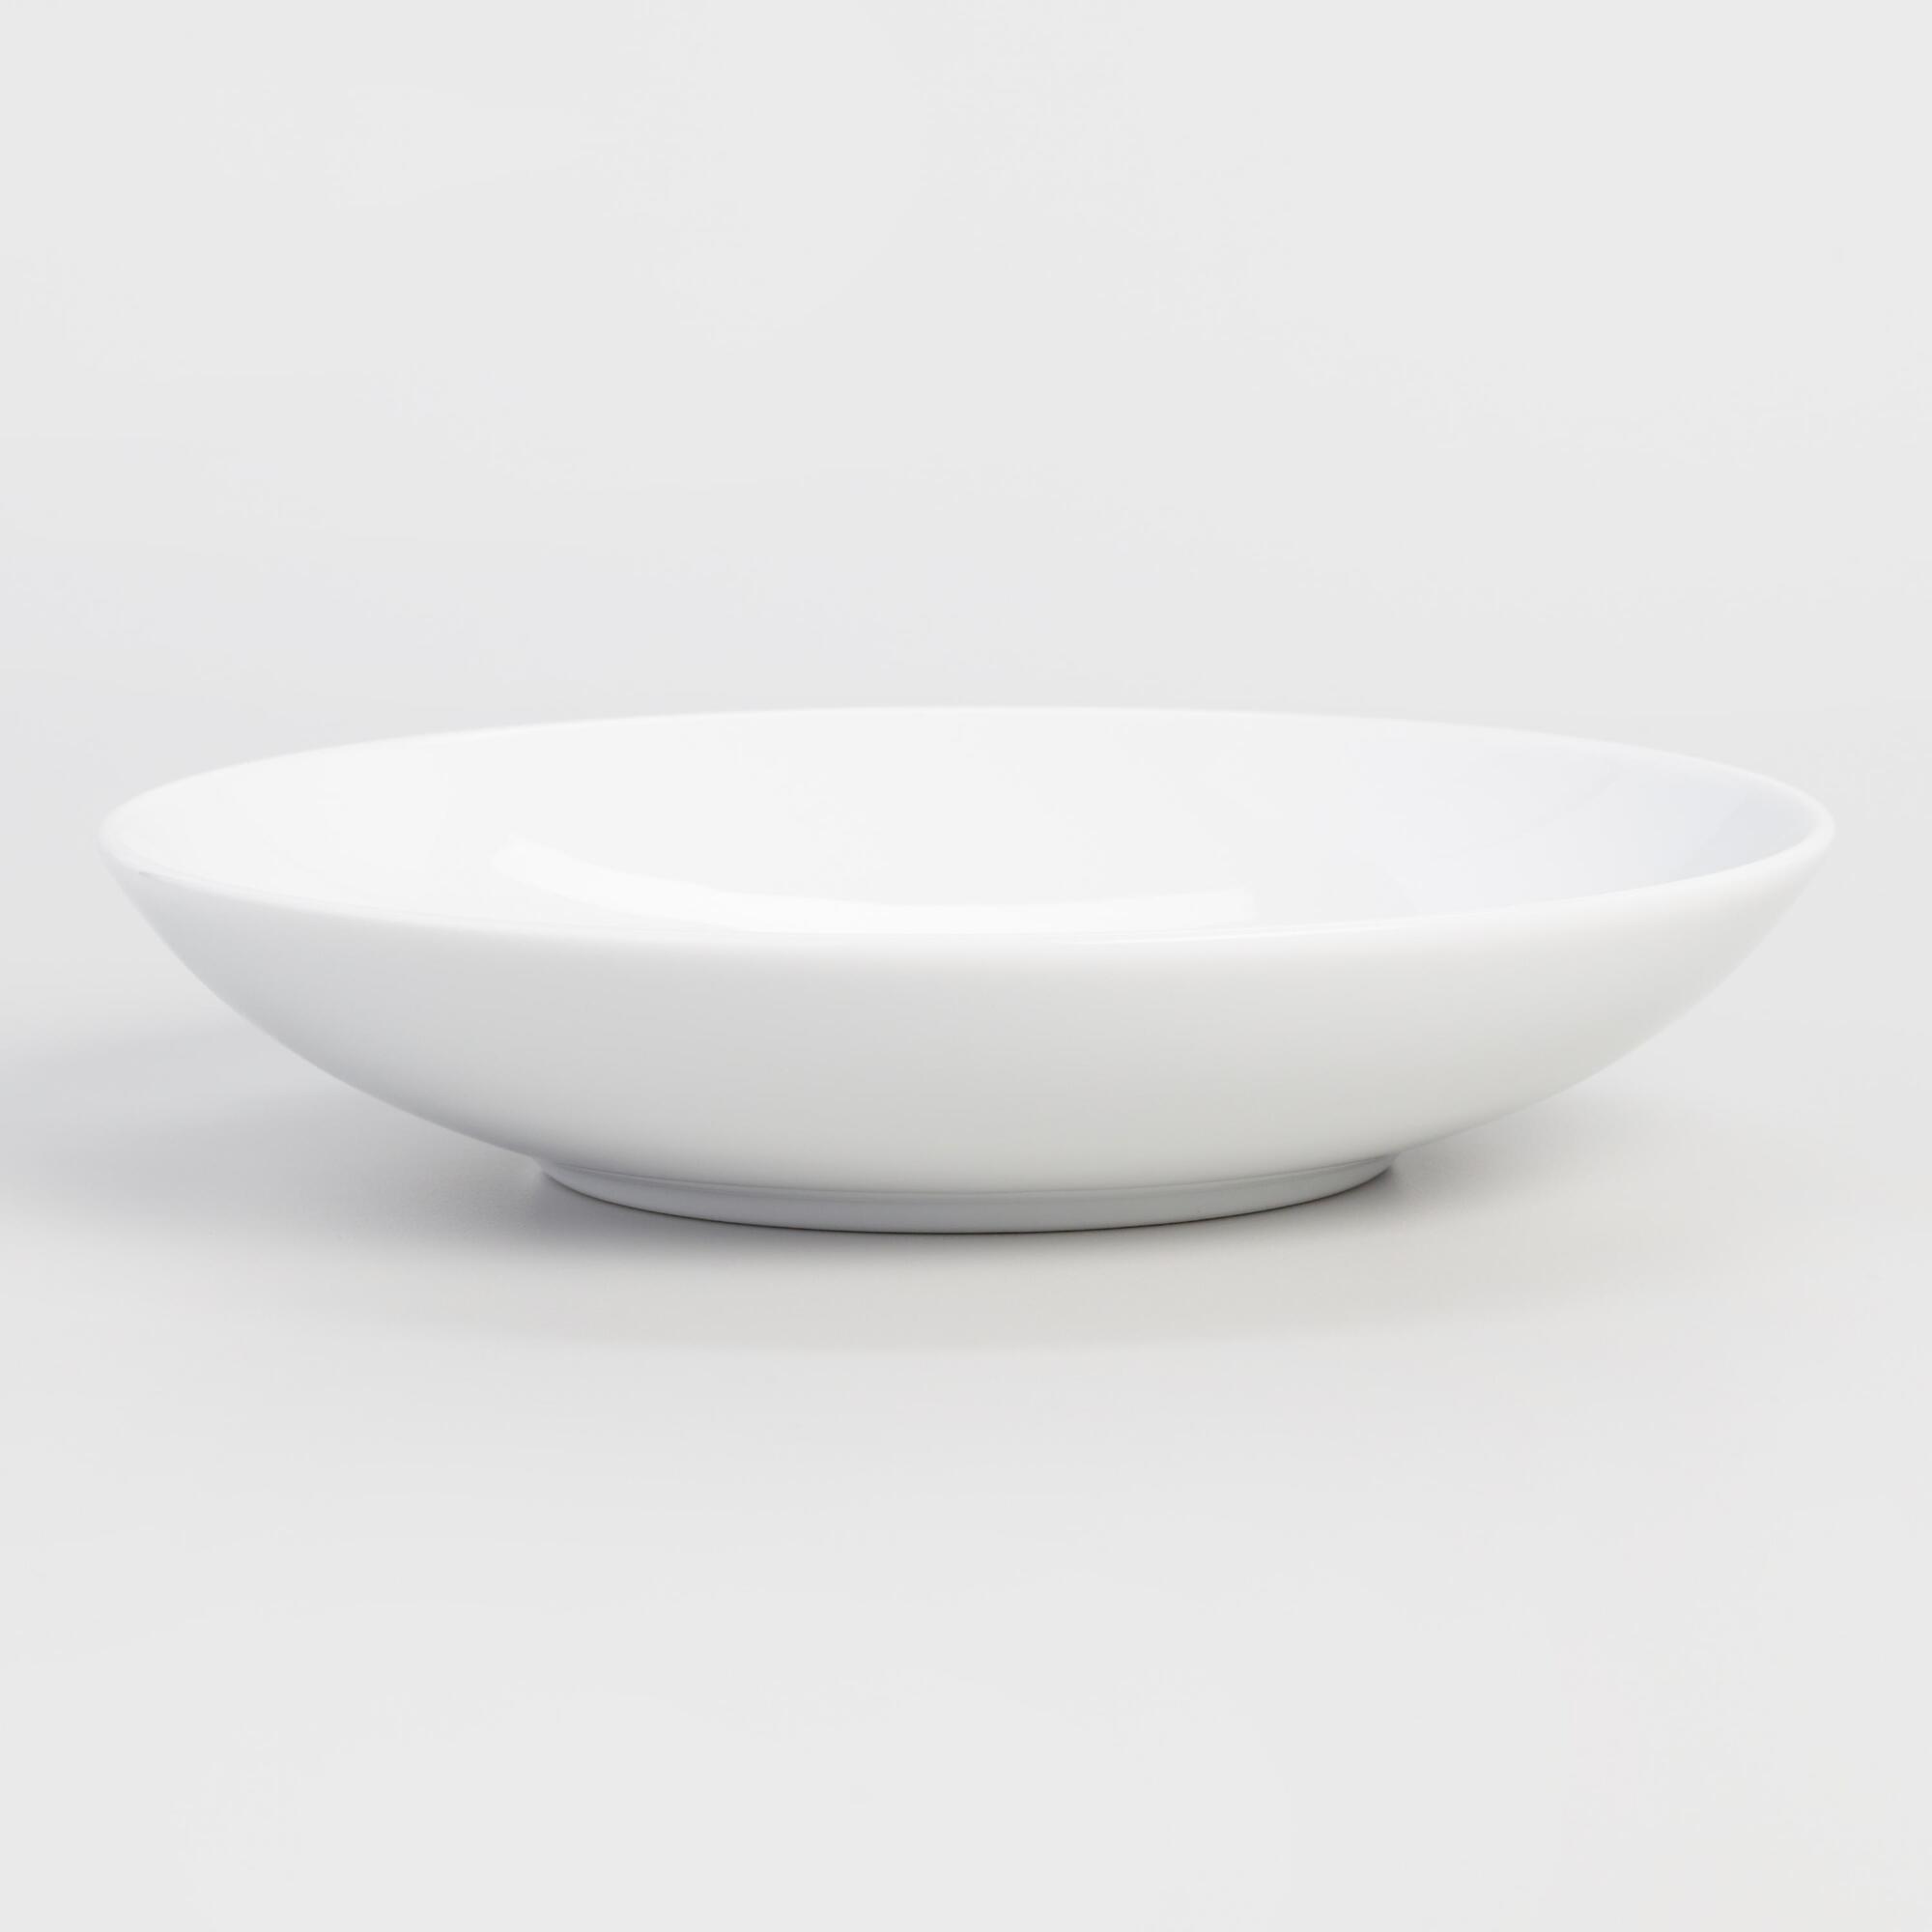 White Coupe Soup Bowls, set of 4 | World Market